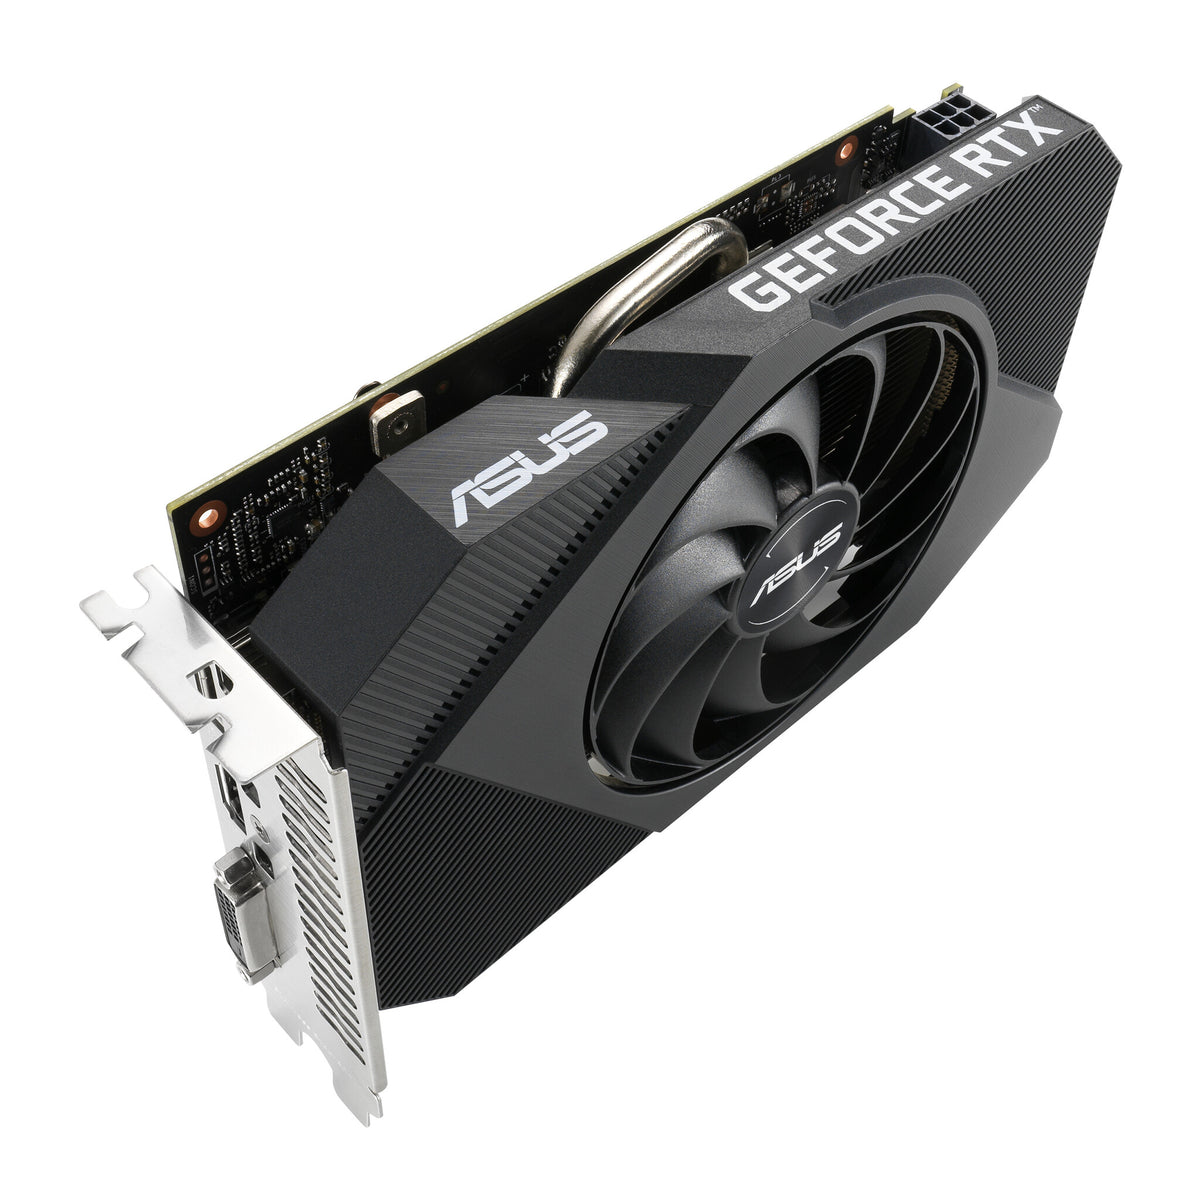 ASUS Phoenix - NVIDIA 8 GB GDDR6 GeForce RTX 3050 graphics card